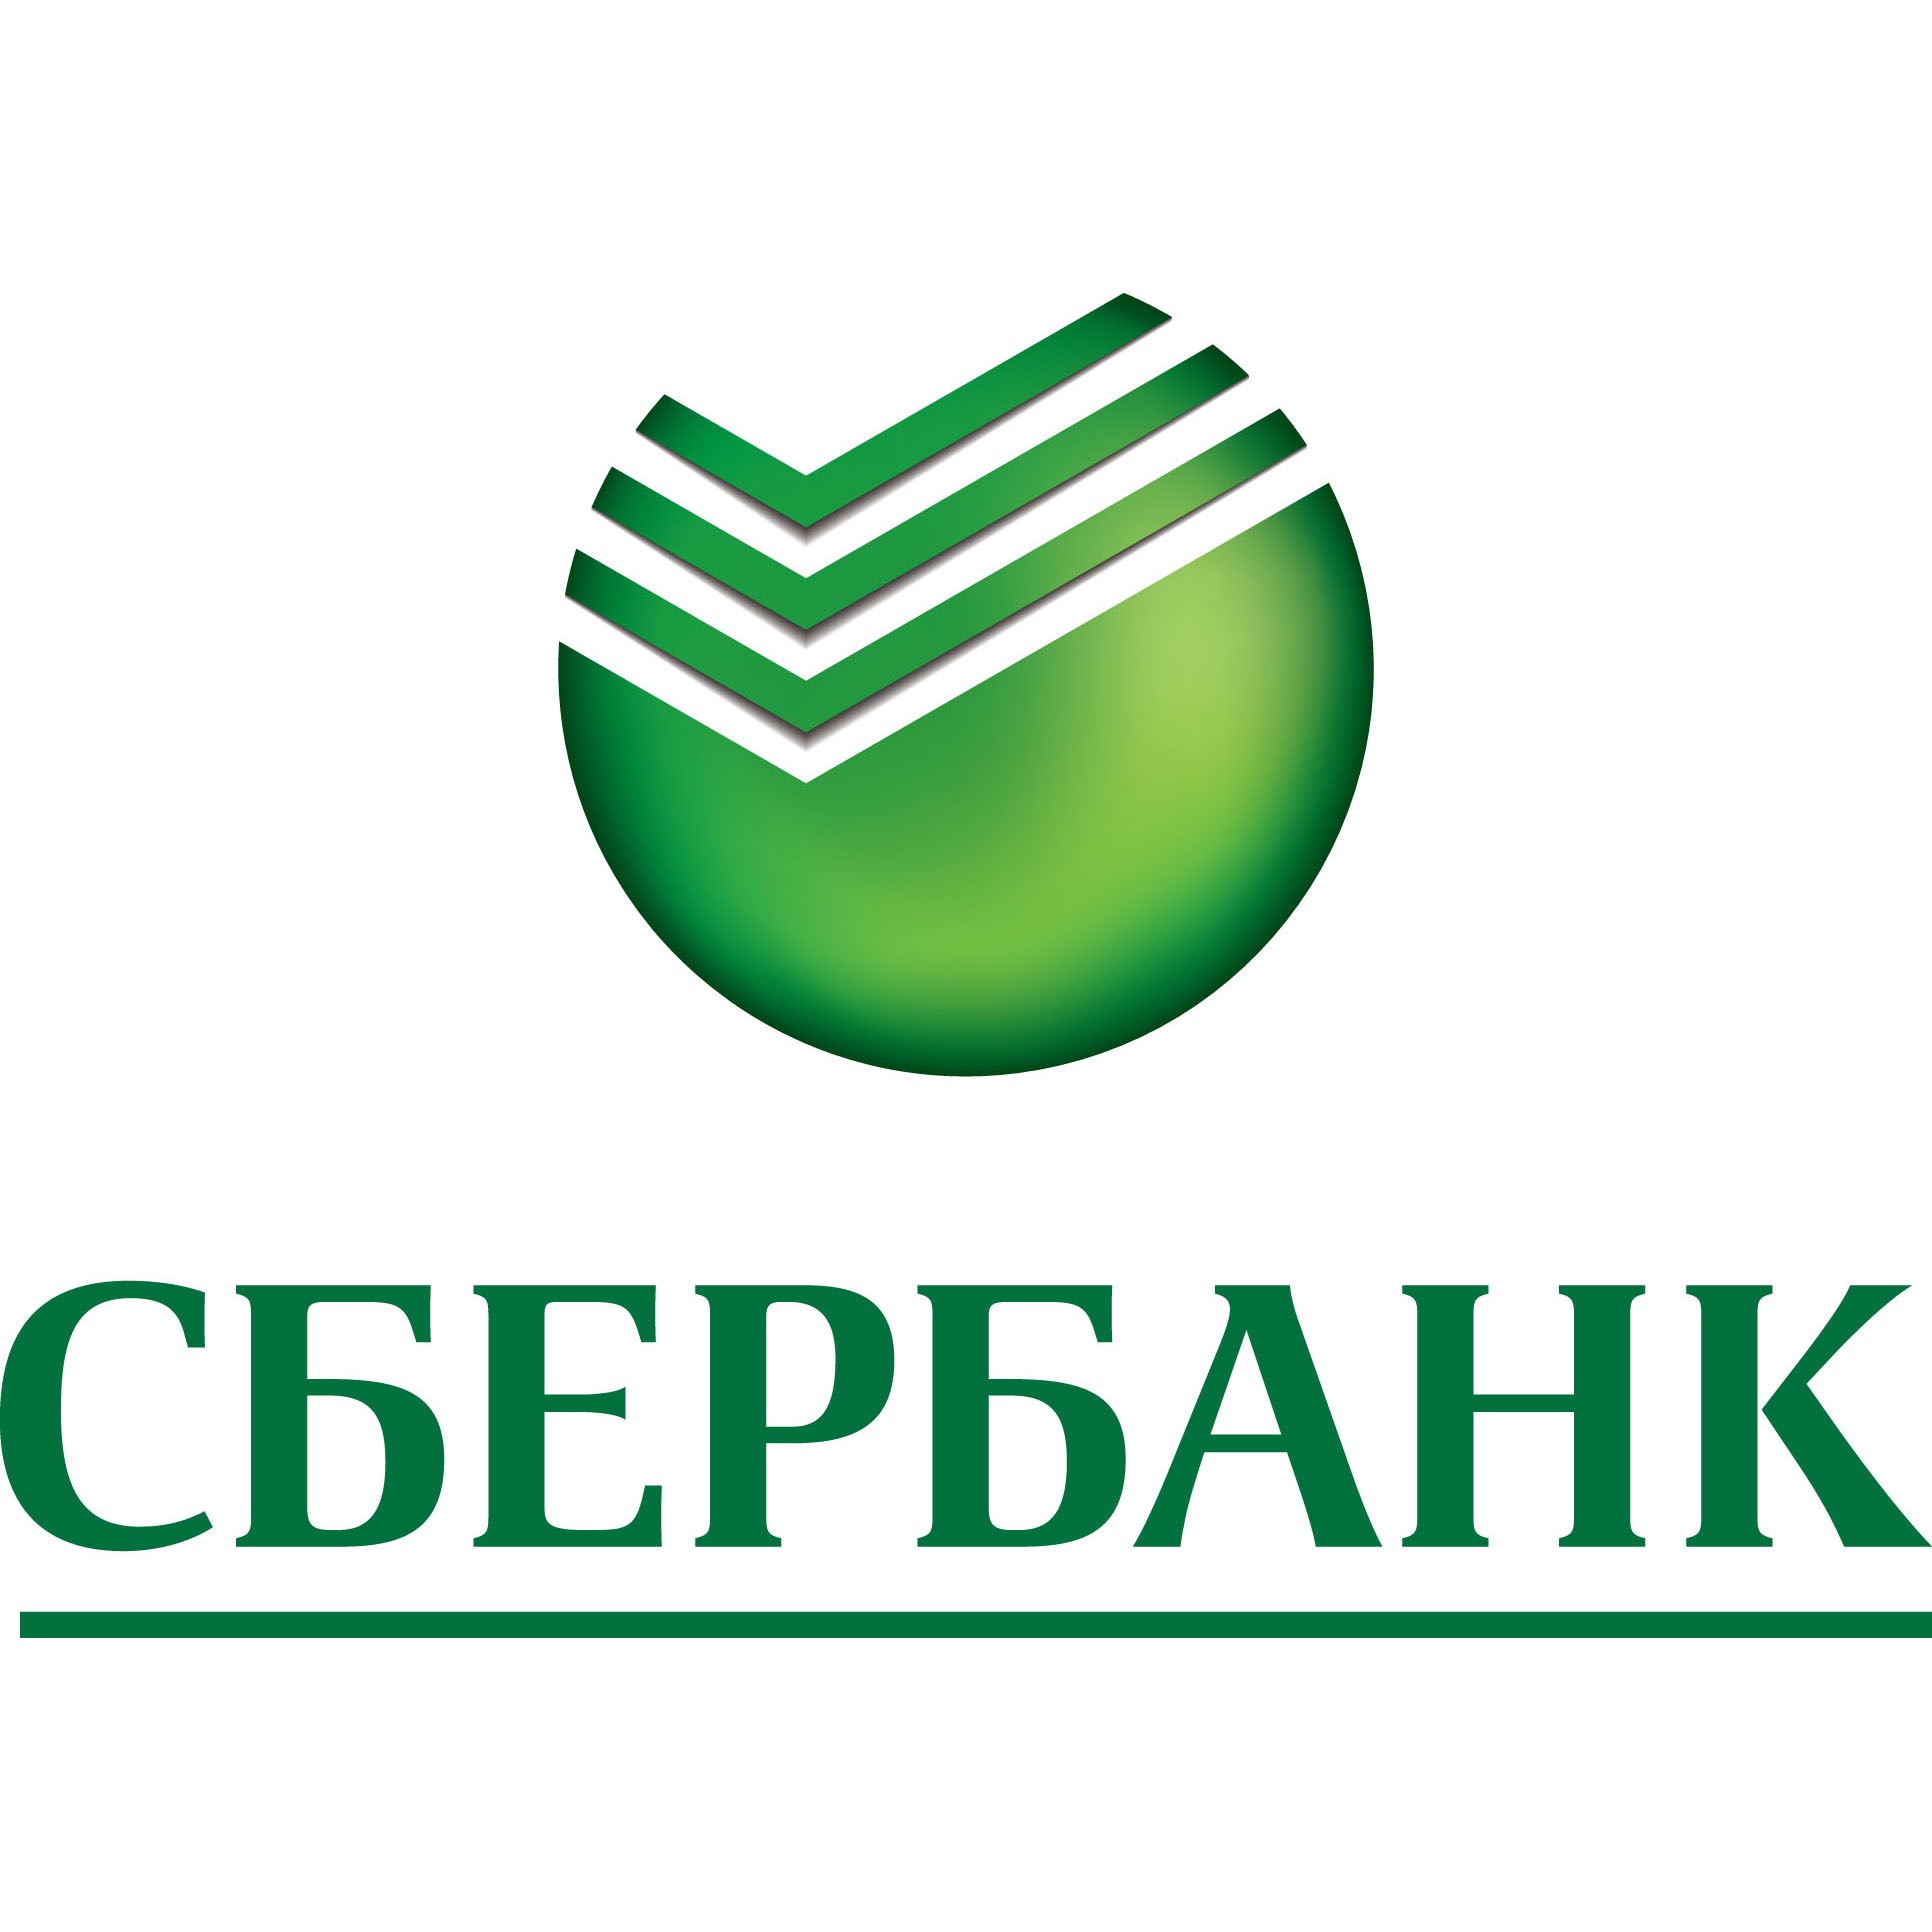 Sberbank service cc. Сбербанк. Сбербанк логотип. Старый логотип Сбербанка. Сбербанк фон.